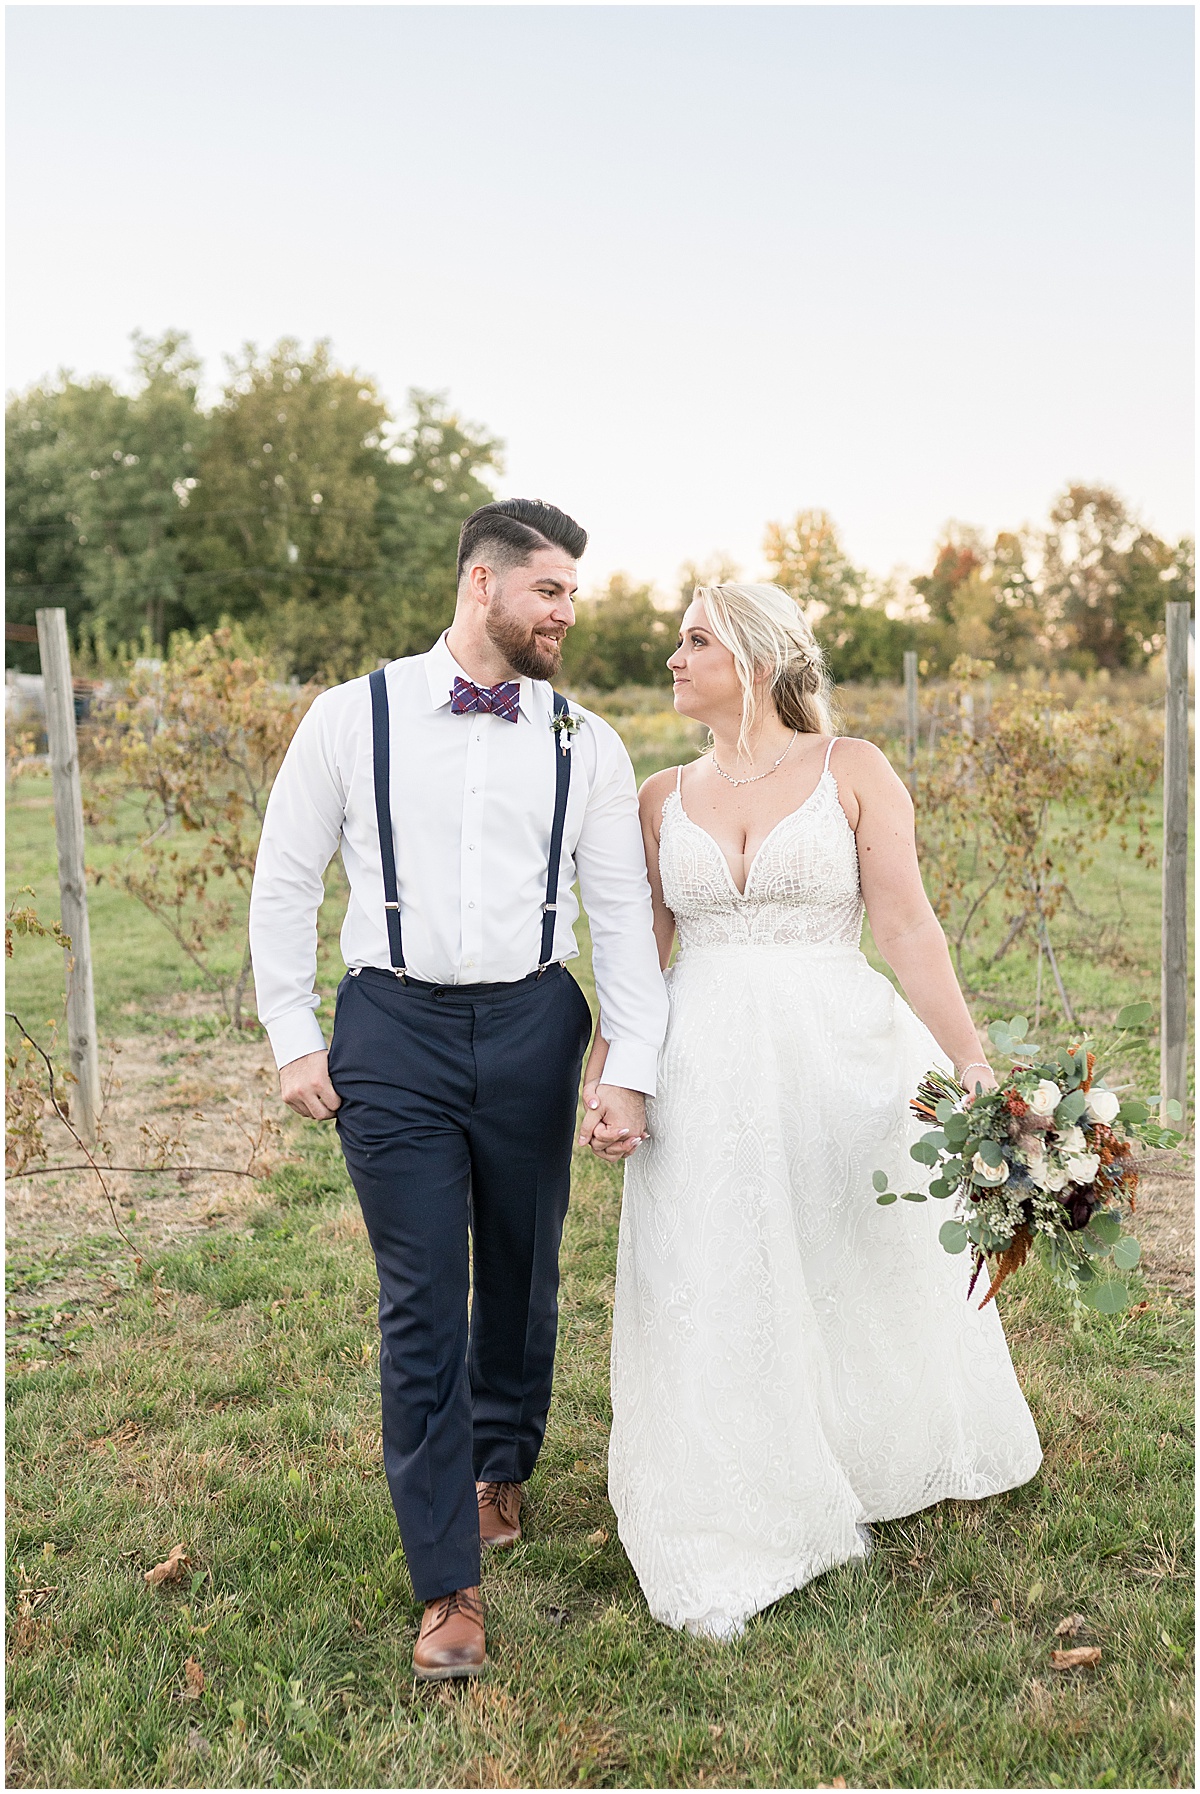 Bride and groom walk through vineyard at Finley Creek Vineyards wedding in Zionsville, Indiana